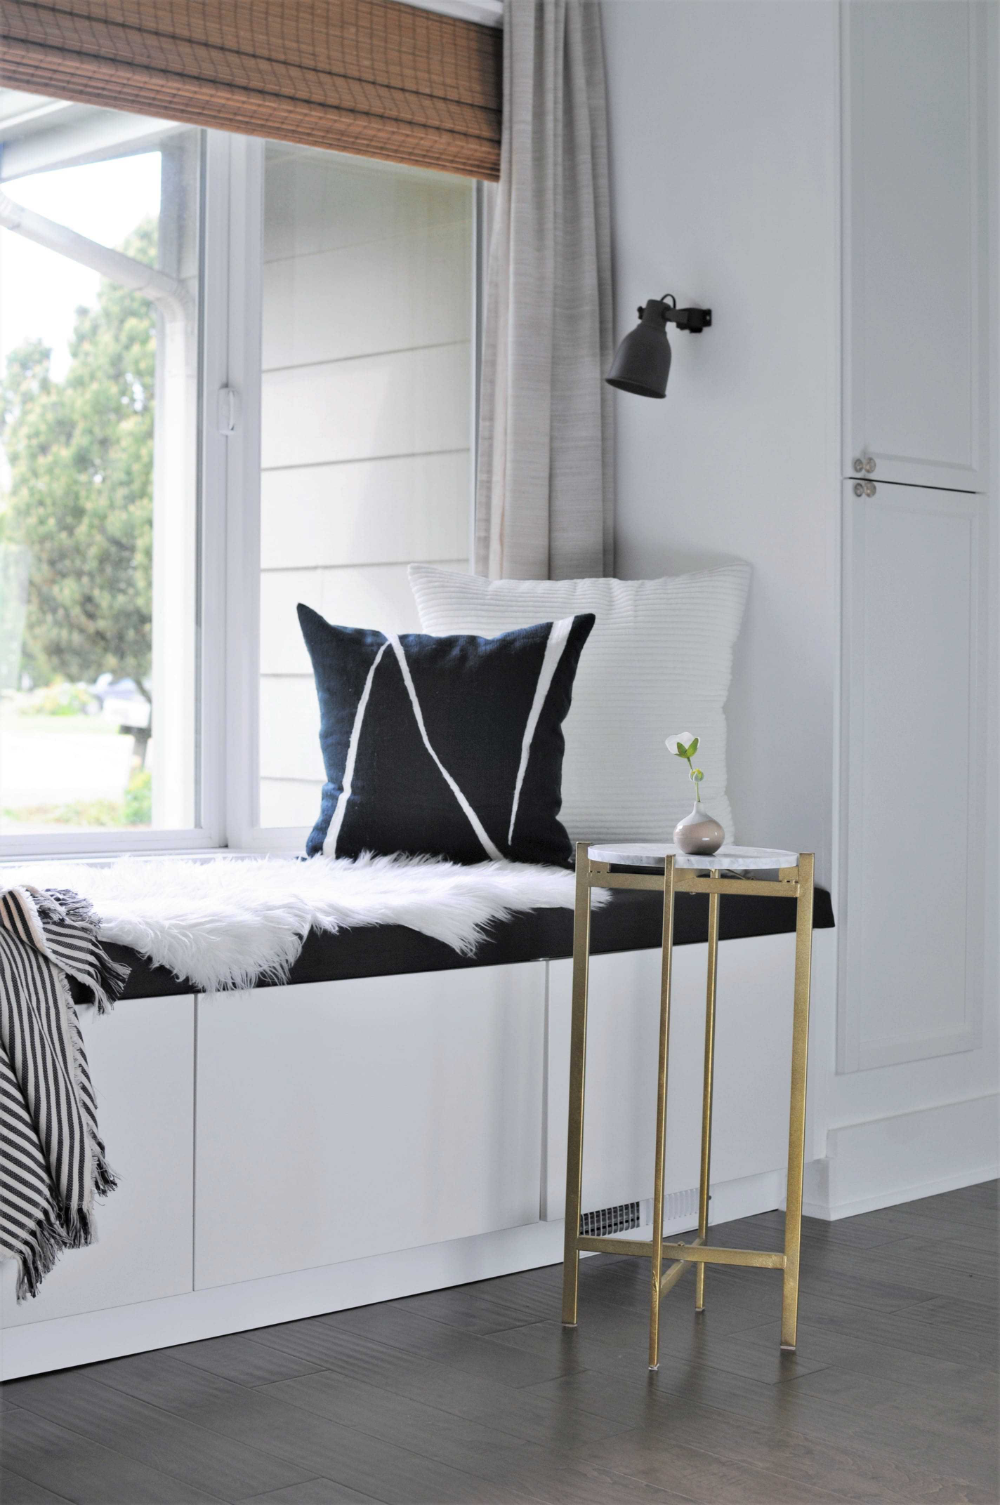 DIY Window Seat with Storage out of IKEA Cabinets - Joyful Derivatives -   diy Storage seat